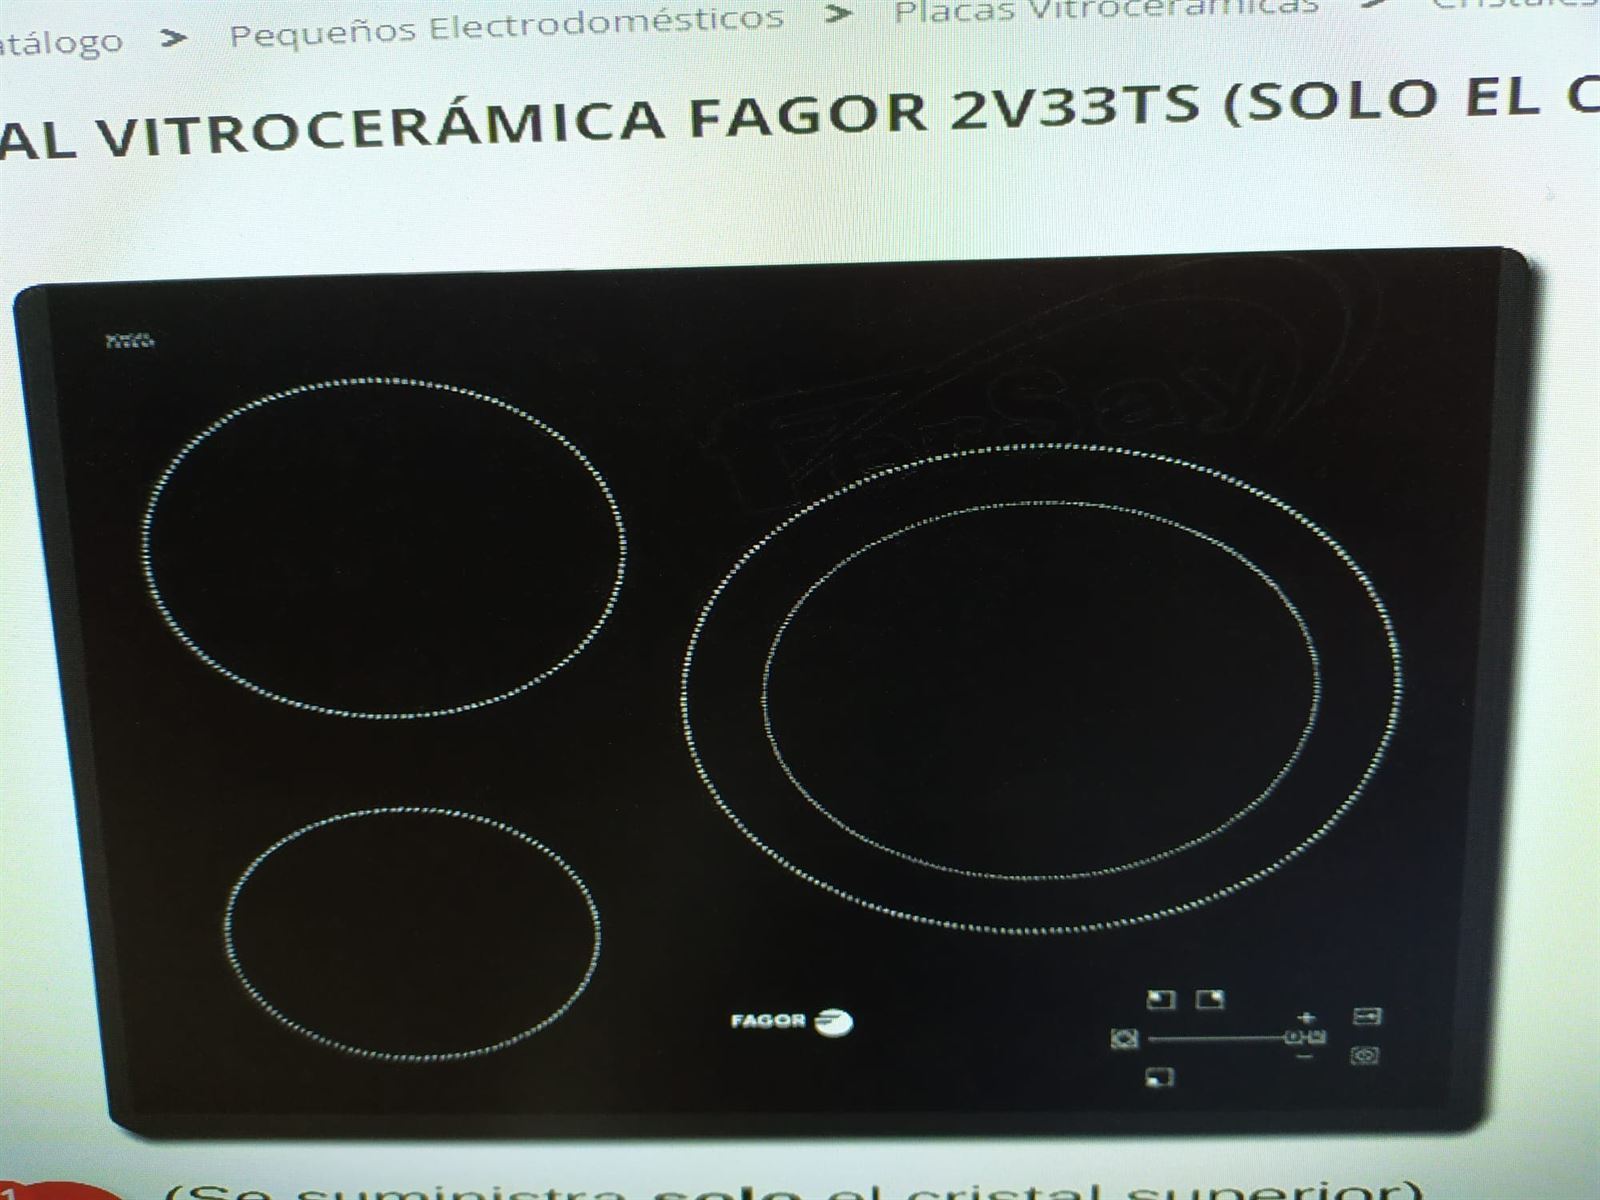 CRISTAL VITROCERAMICA FAGOR, 3 FUEGOS (SOLO CRISTAL), RECAMBIO ORIGINAL, 2V33TS, AS0000077 - Imagen 1